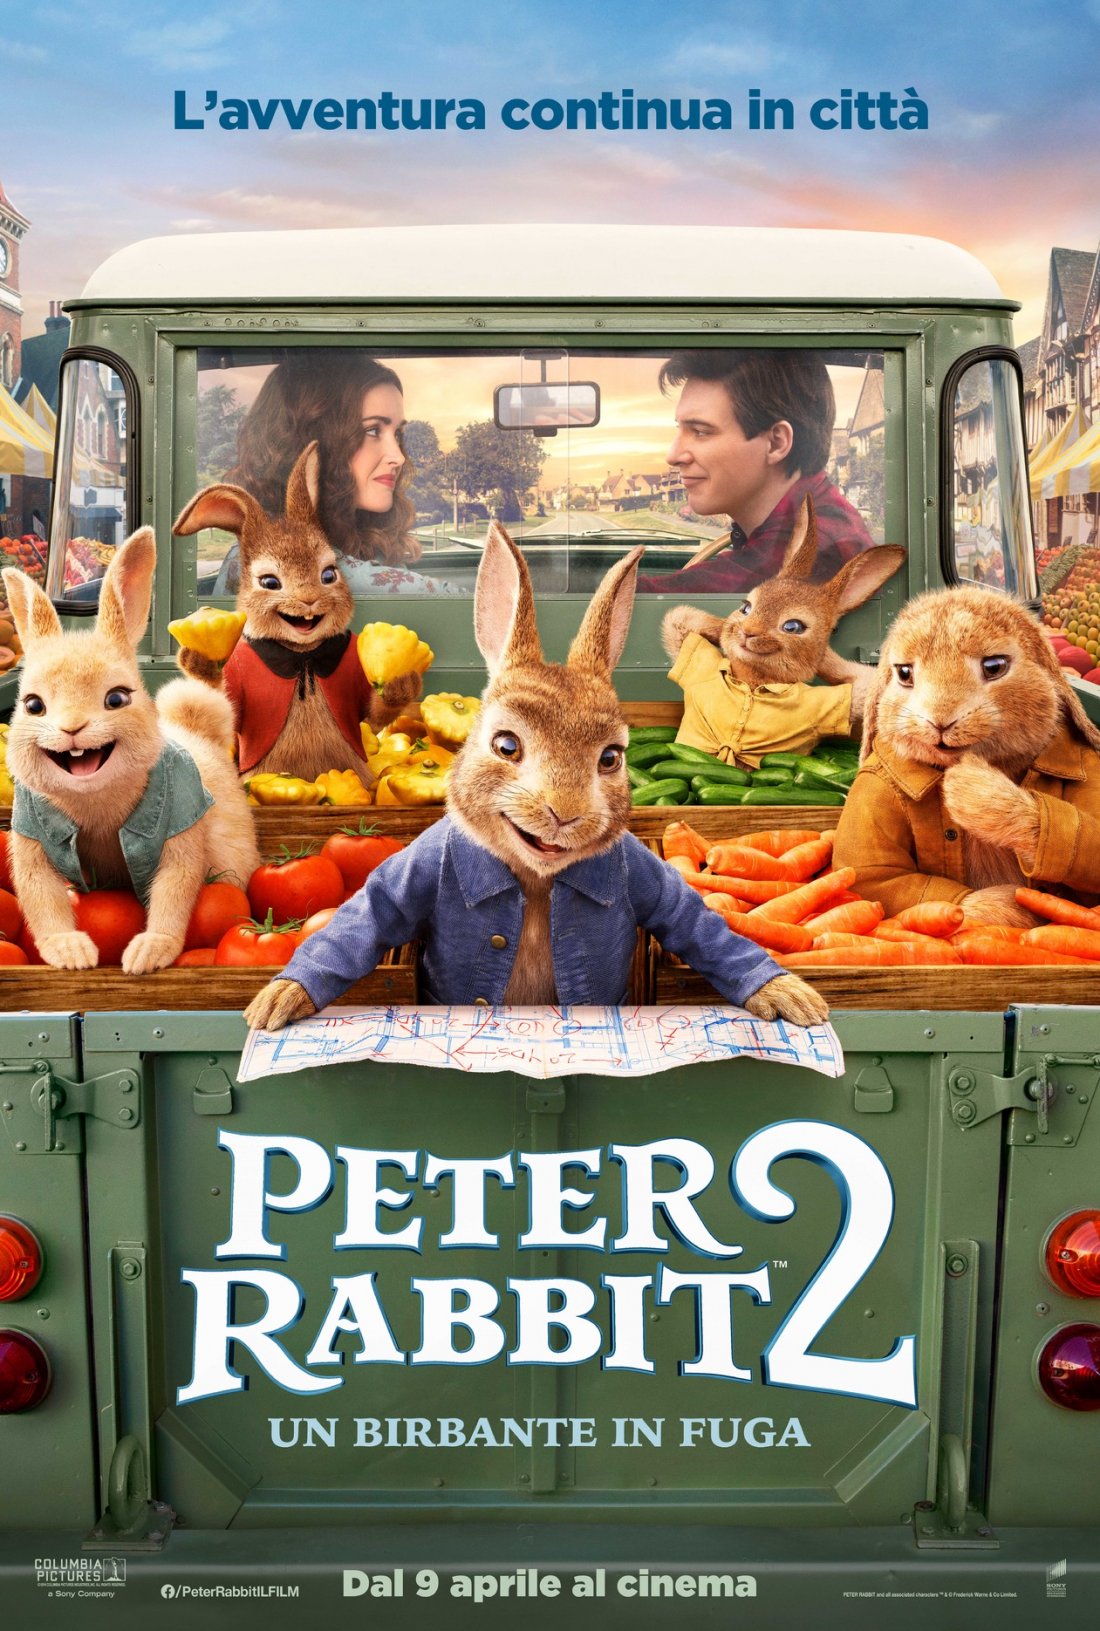 Peter Rabbit 2 Un Birbante In Fuga